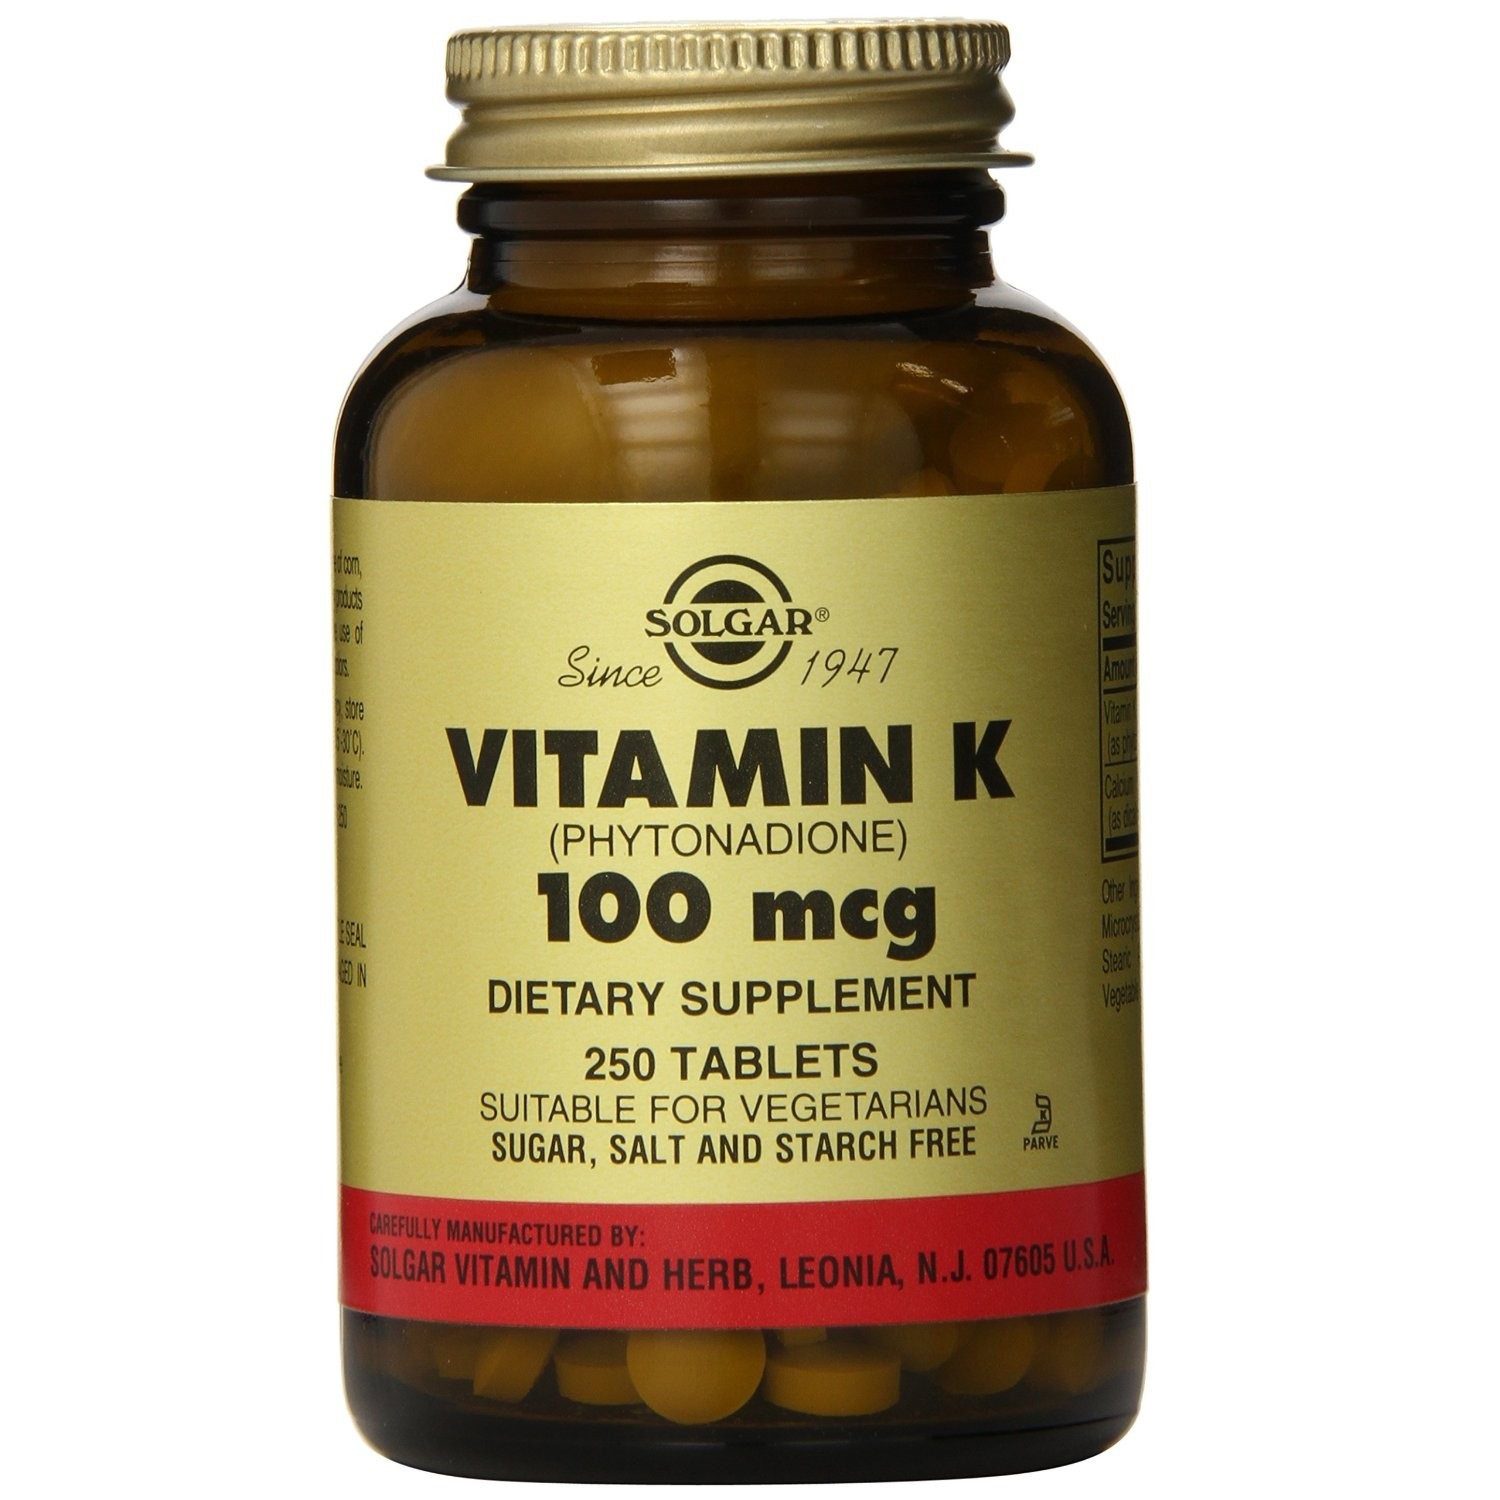 Vit vitamins. НСП витамин в2. Витамин д3 к2 Турция. Солгар витамин к2. Солгар витамин 600.